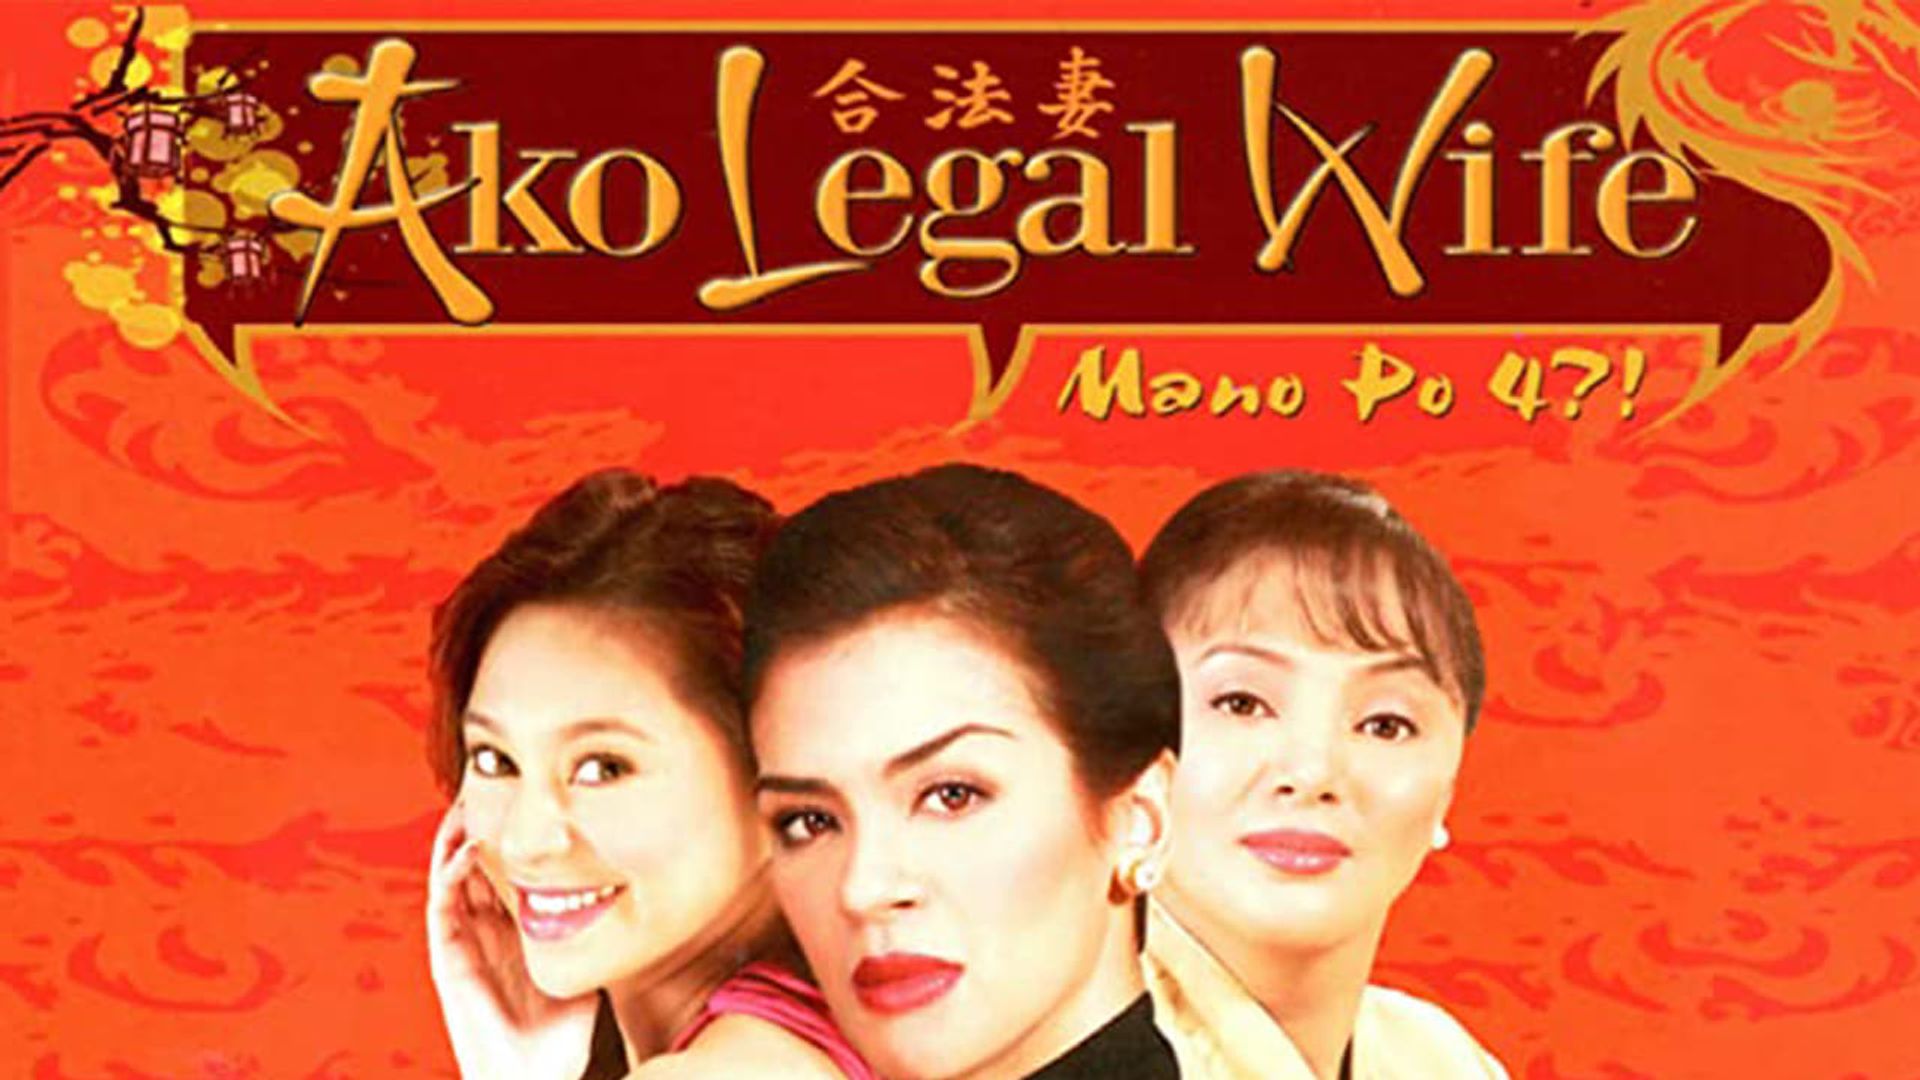 Ako legal wife: Mano po 4? background